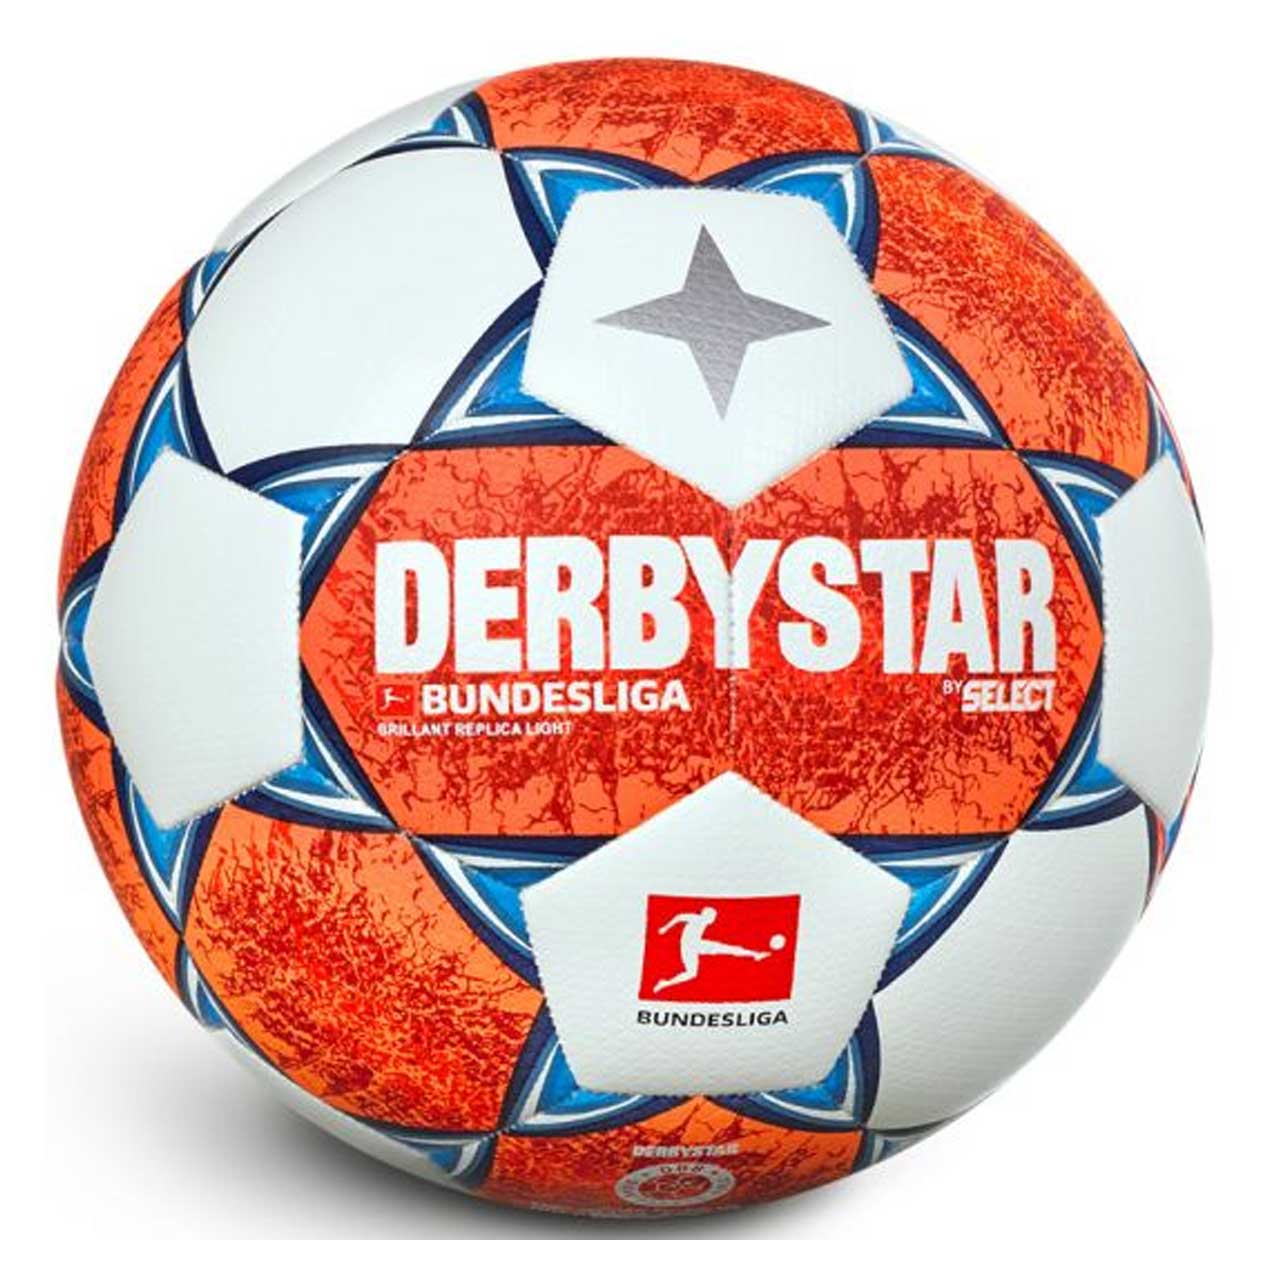 Bundesliga Brillant Replica Minifussball 